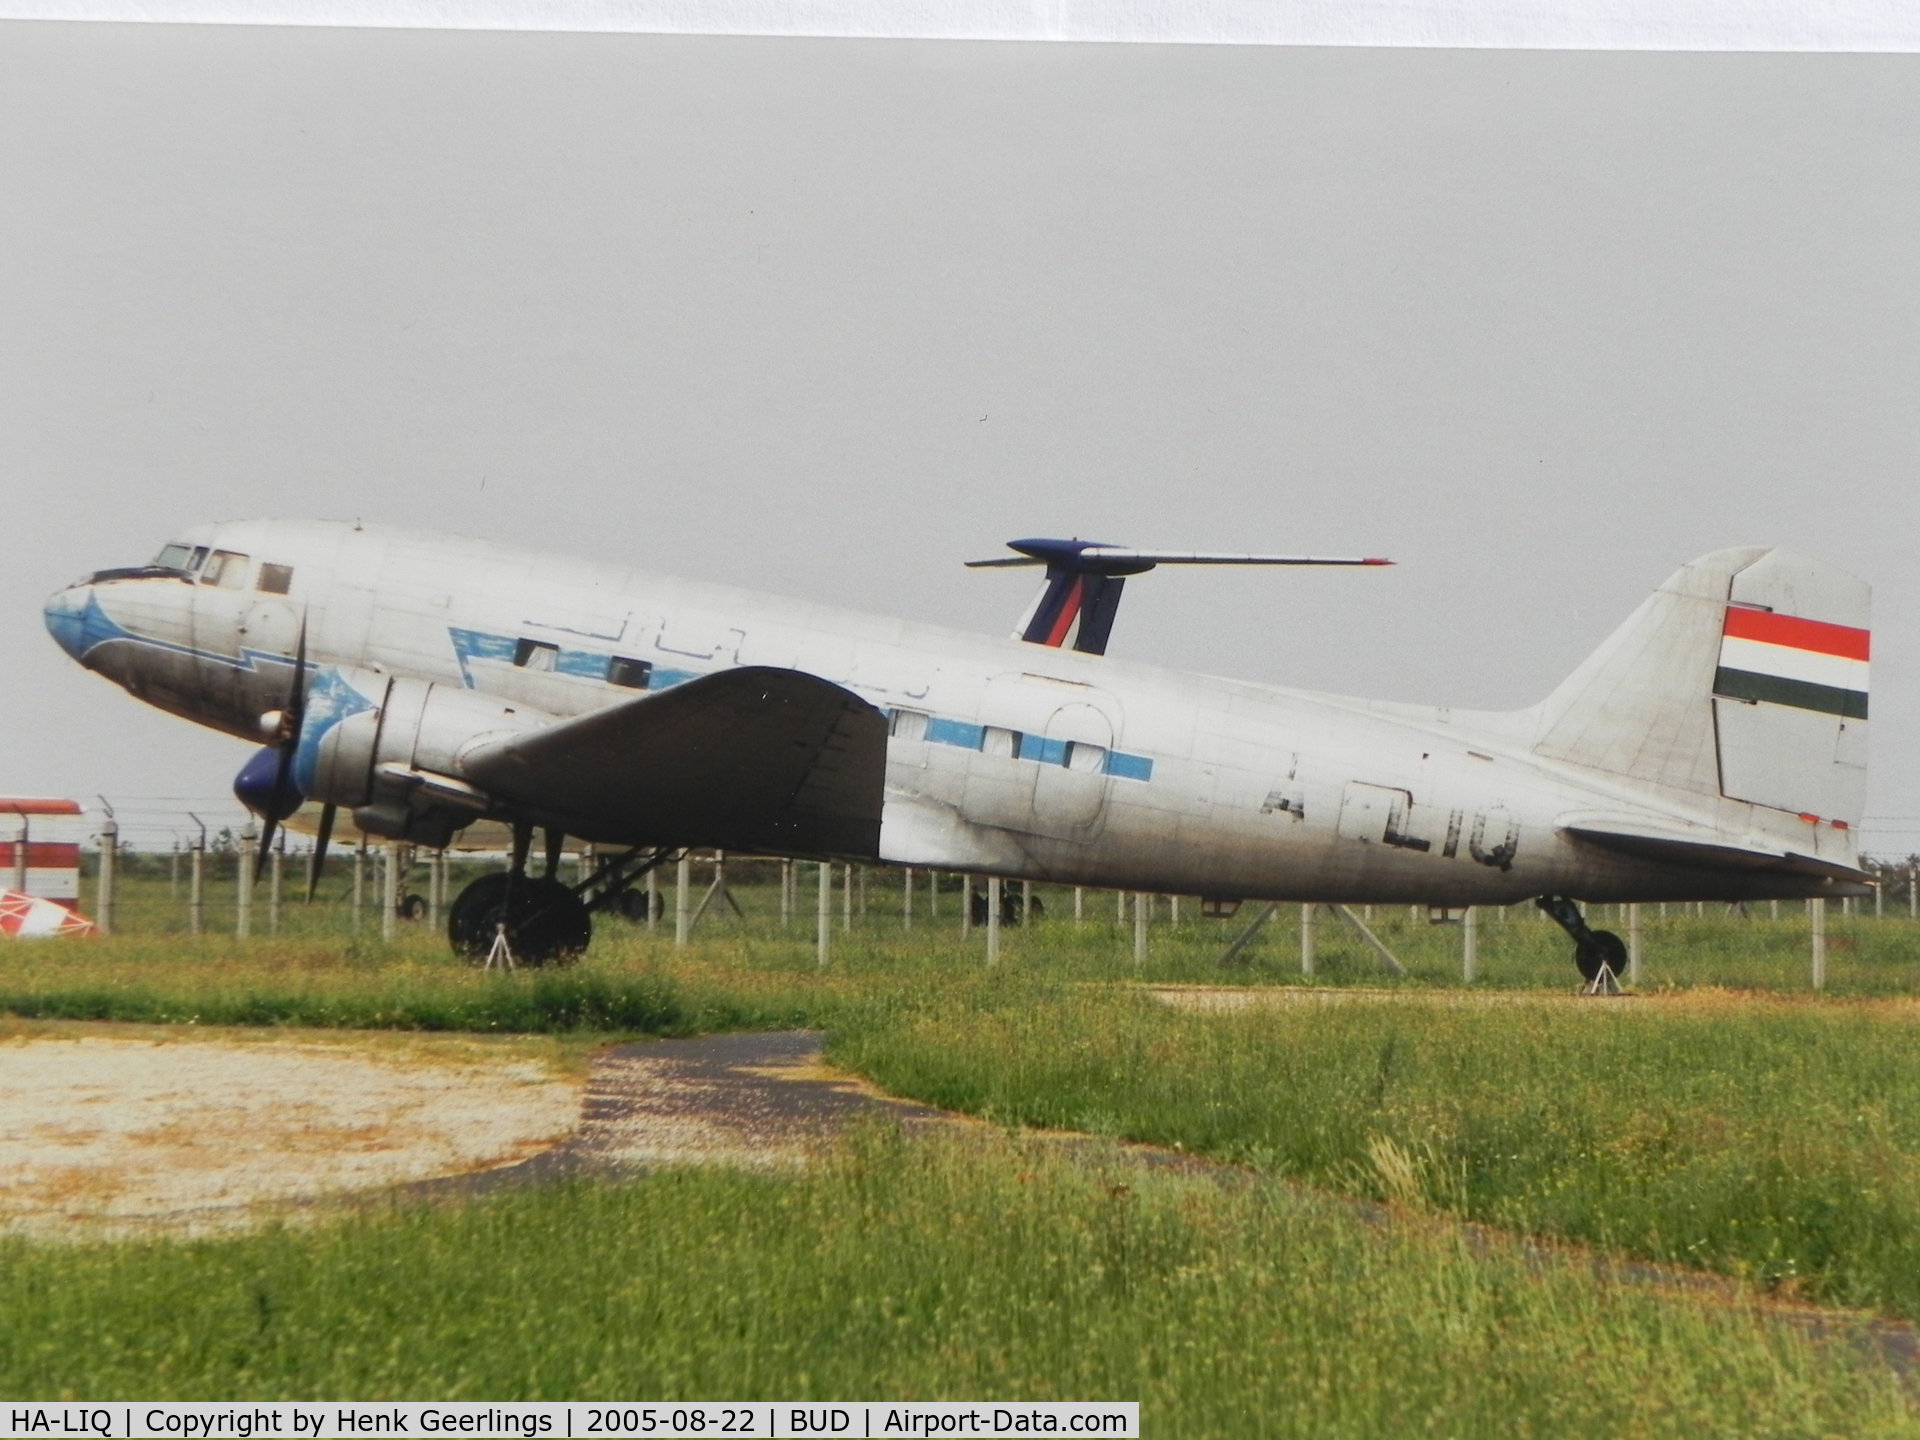 HA-LIQ, 1952 Lisunov Li-2 C/N 23441206, Ferihegy Airport Museum, Budapest

Scan from photo taken in Aug 2005